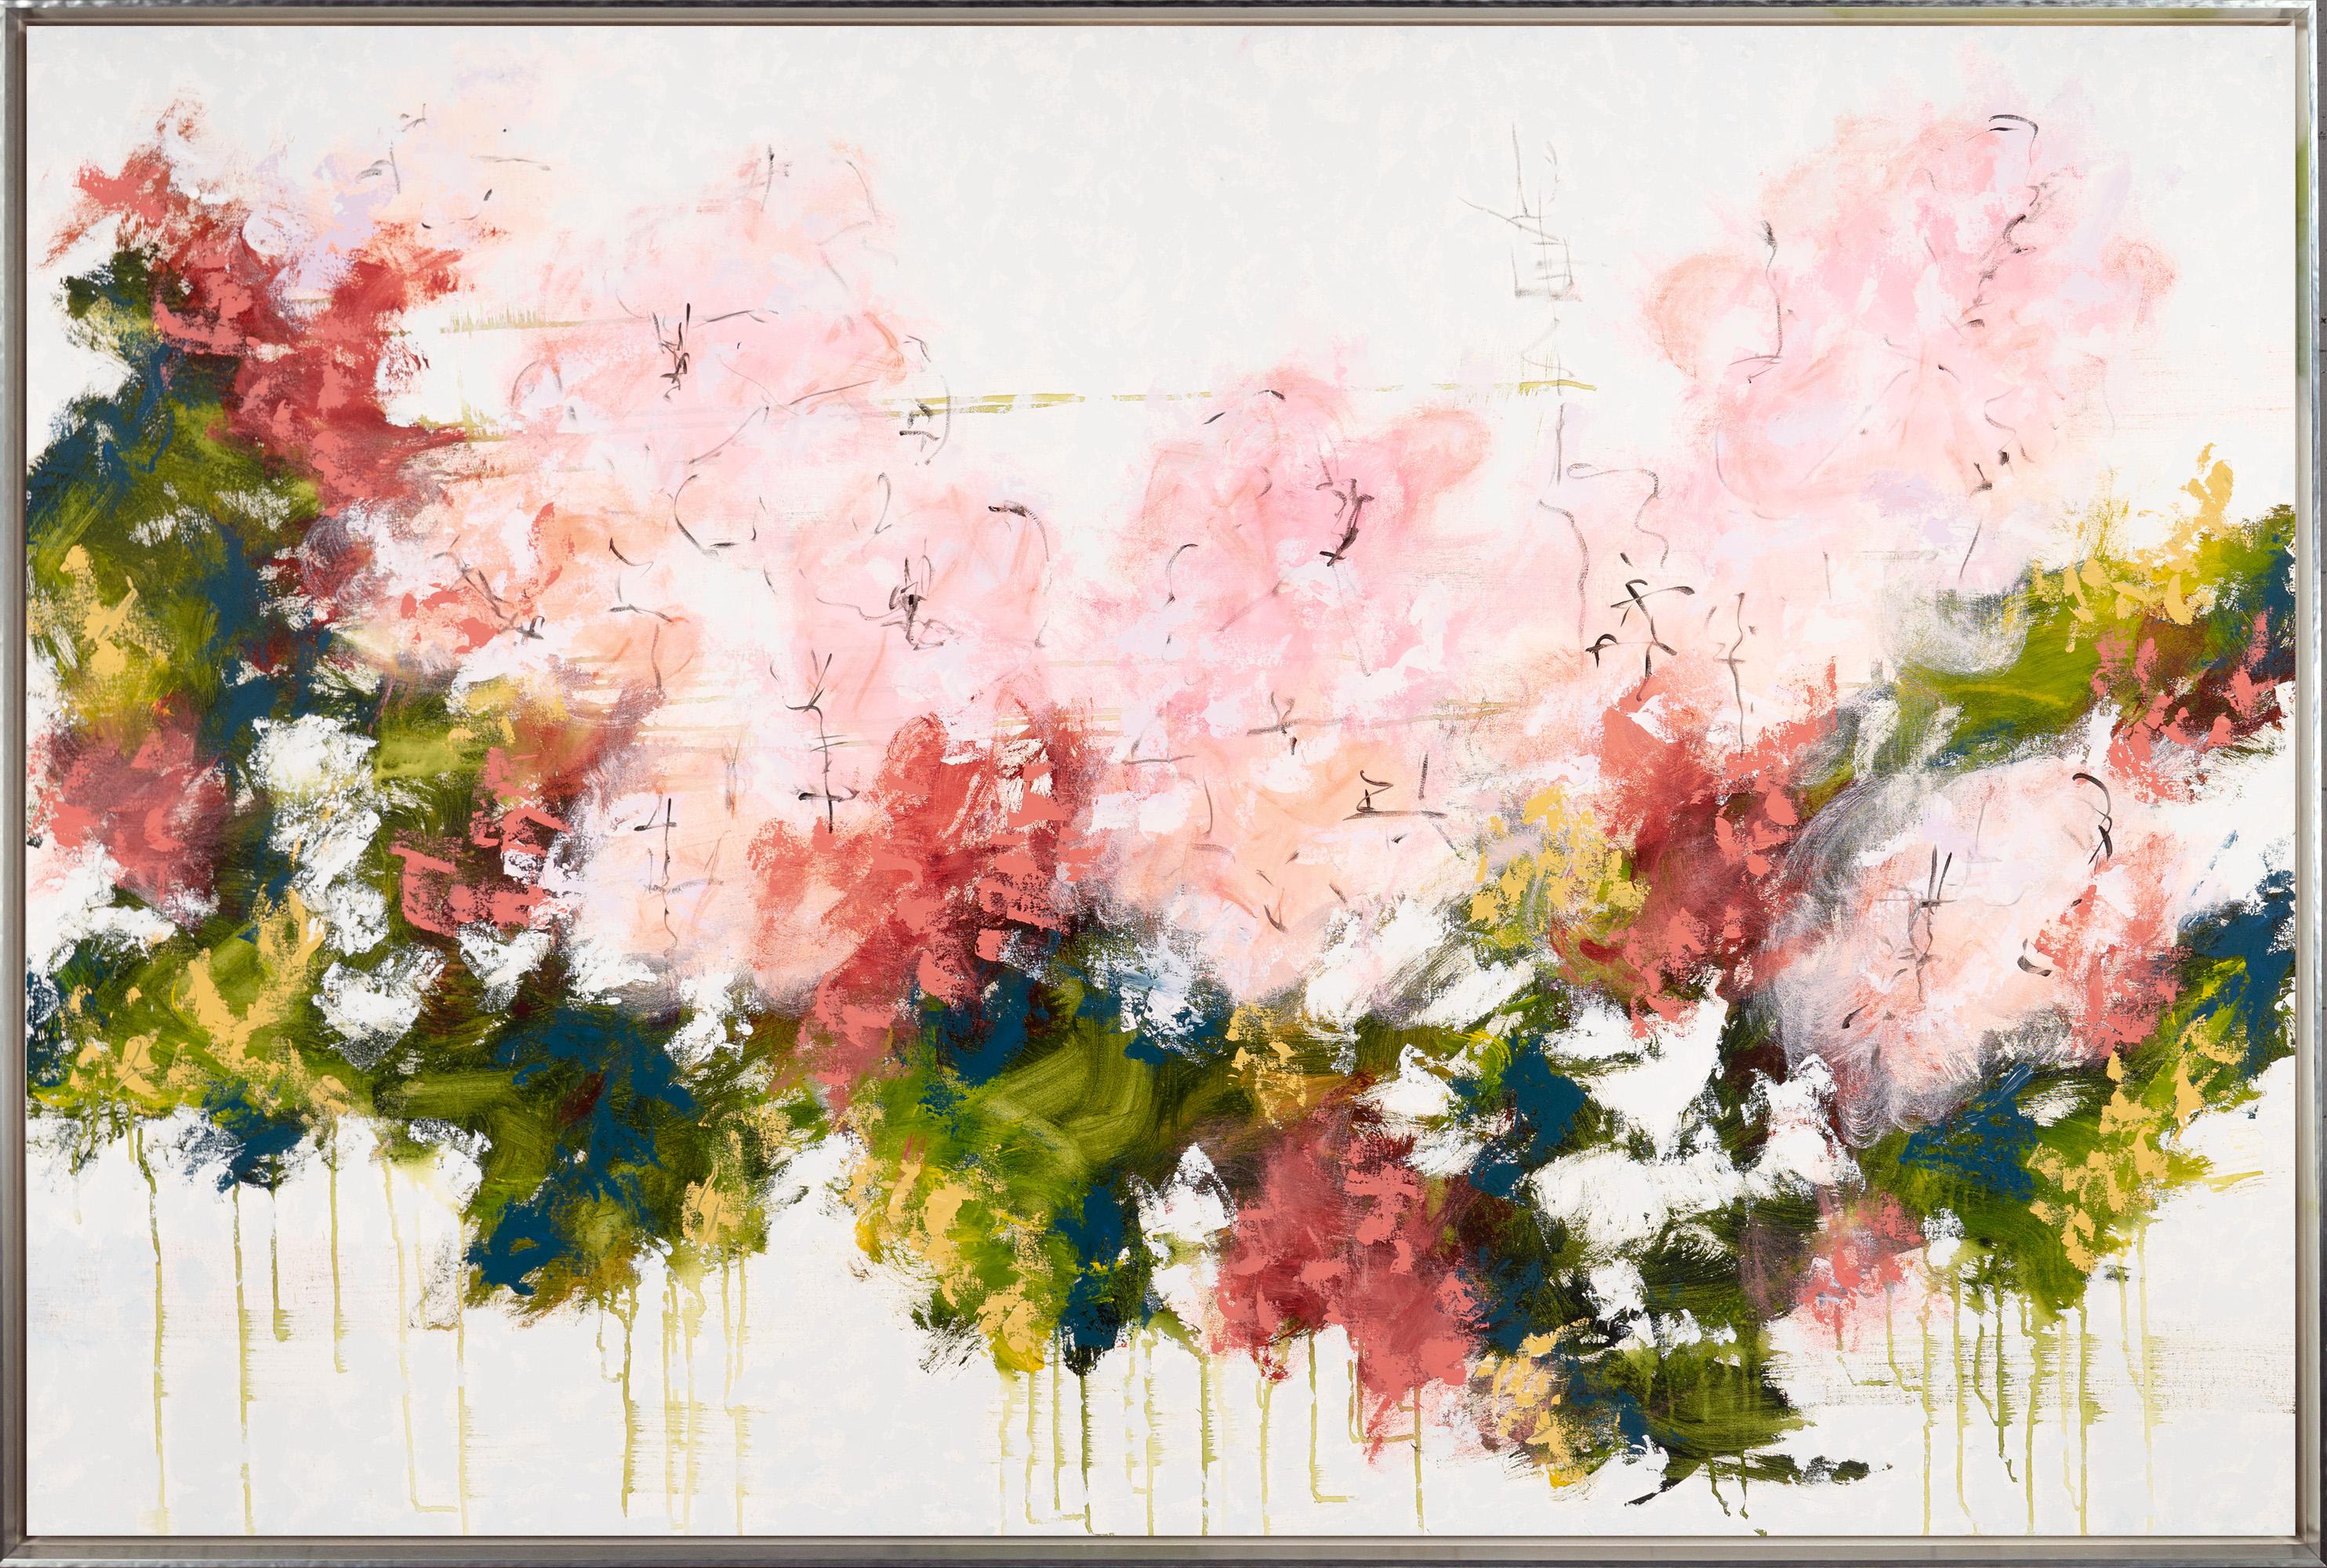 "Botanica 15-2" Contemporary Abstract Floral Framed Mixed Media on Canvas - Mixed Media Art by David Skillicorn